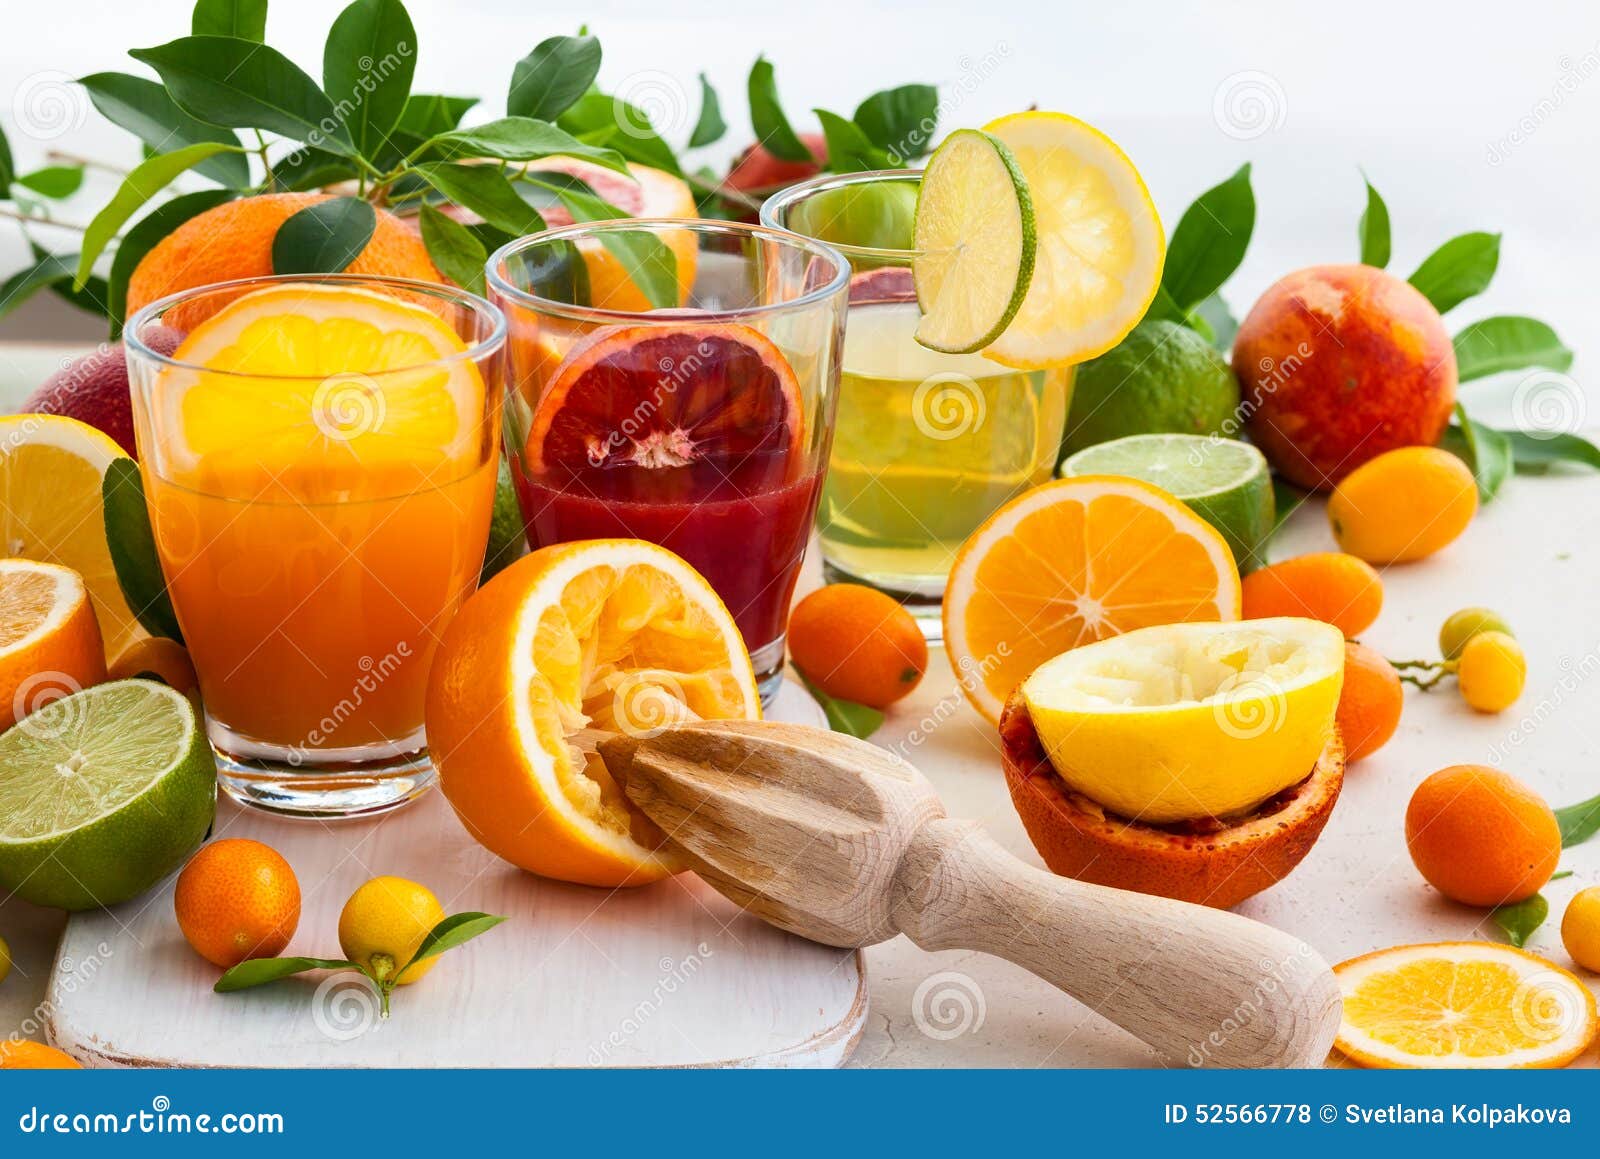 fresh citrus juices